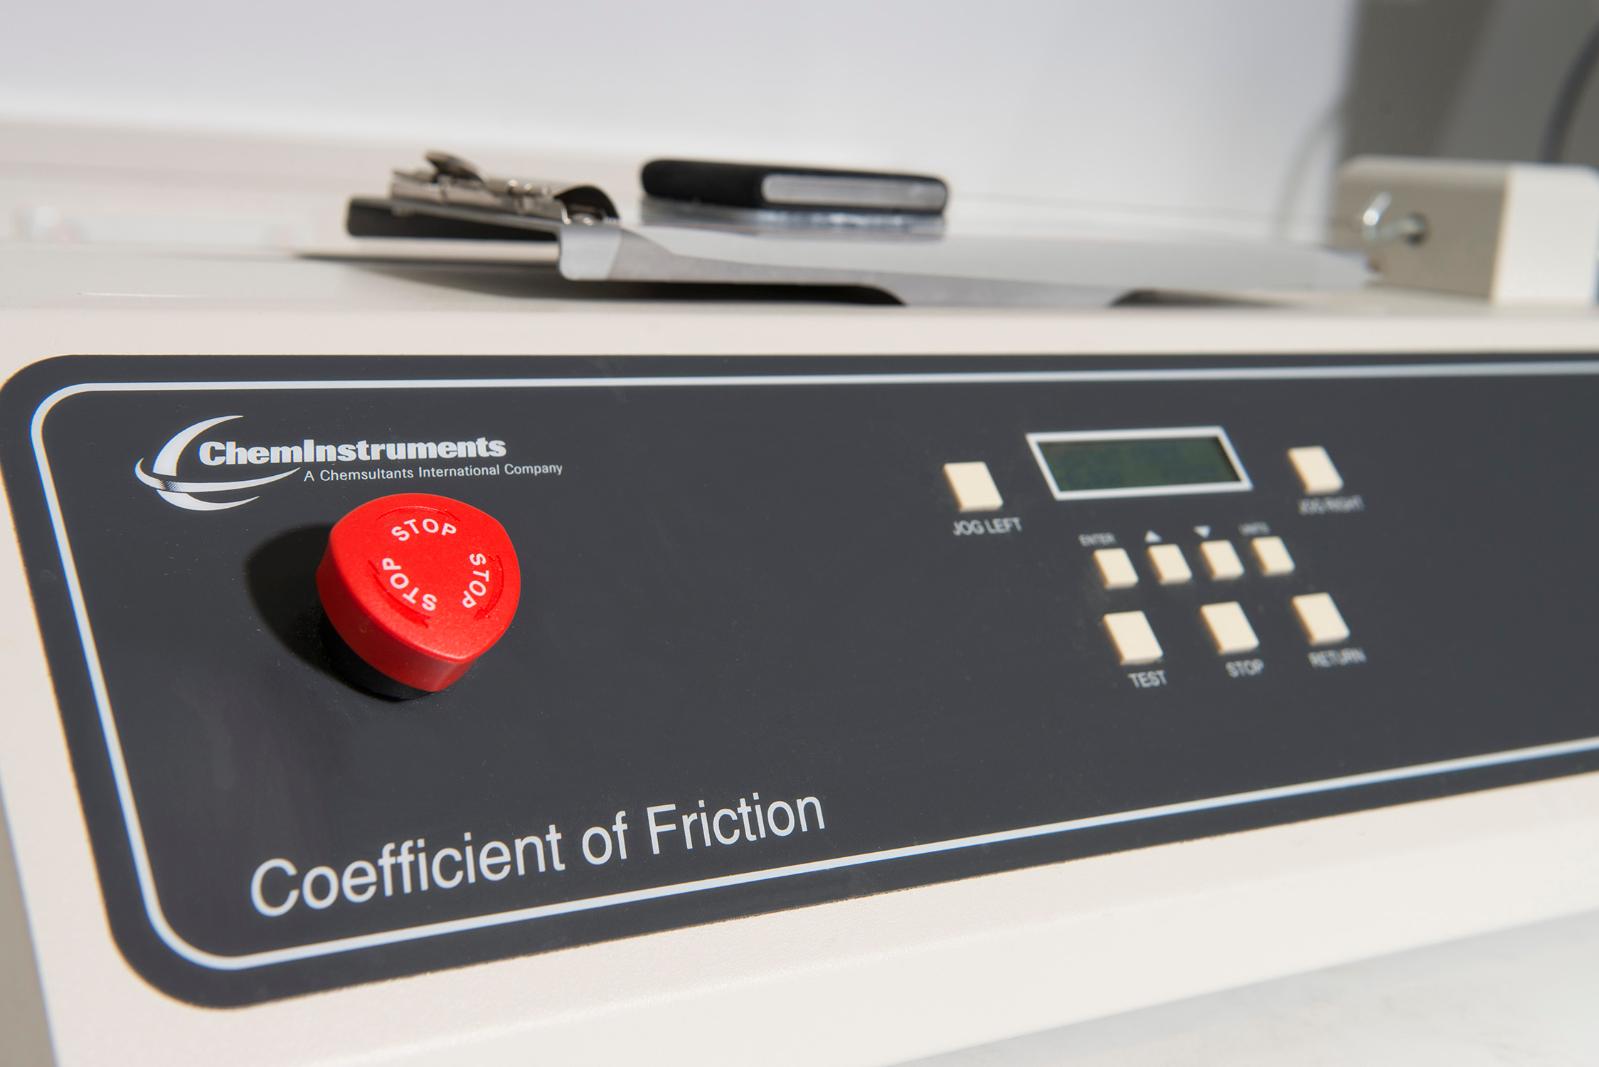 ChemInstruments Coefficient of Friction Analyser